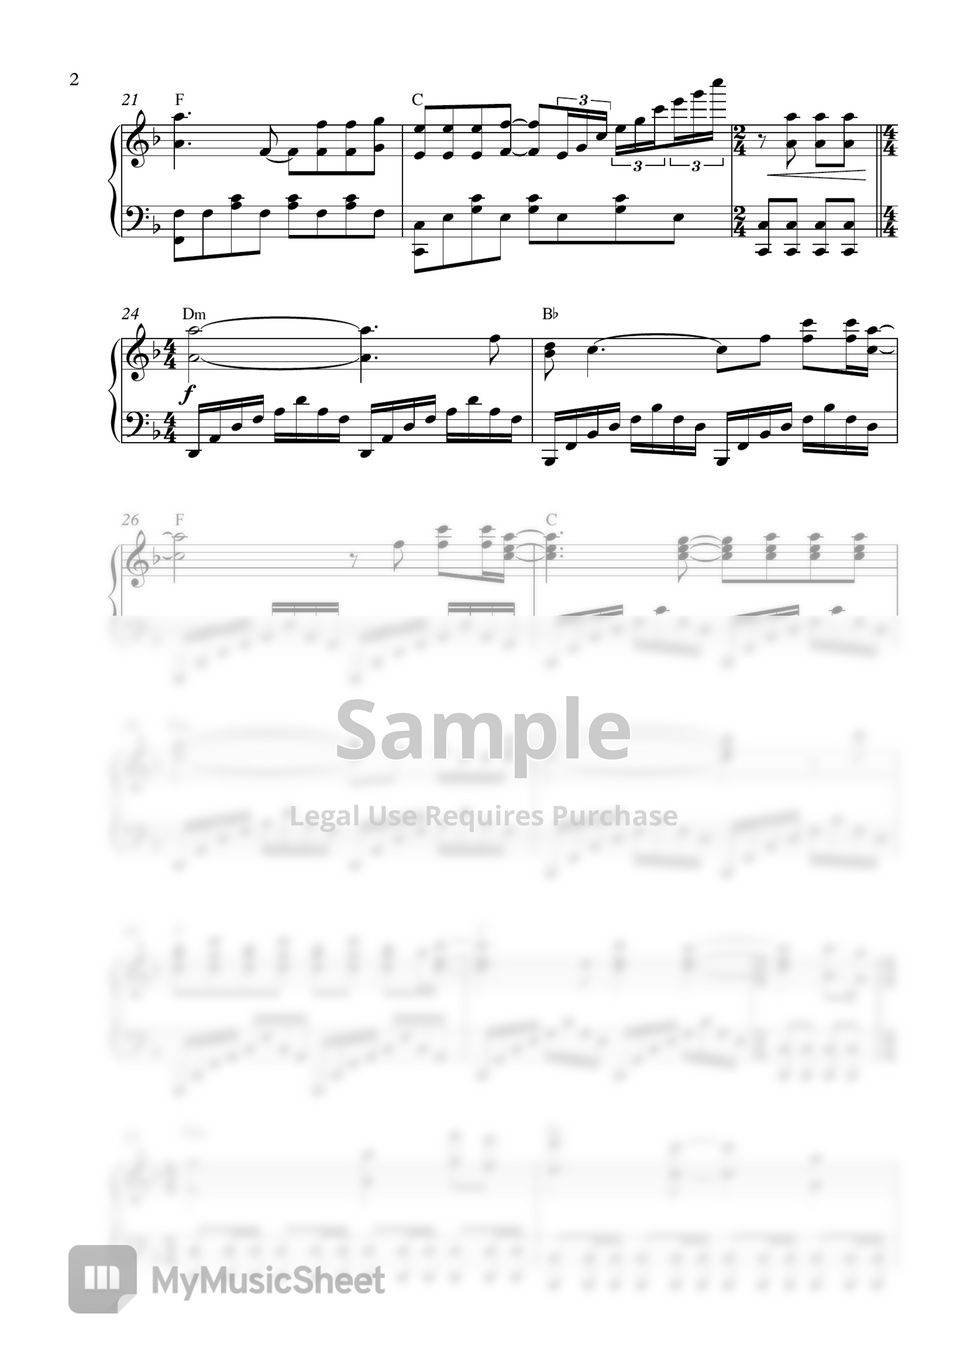 Alan Walker - FADED - Restrung (Piano Sheet) by Pianella Piano